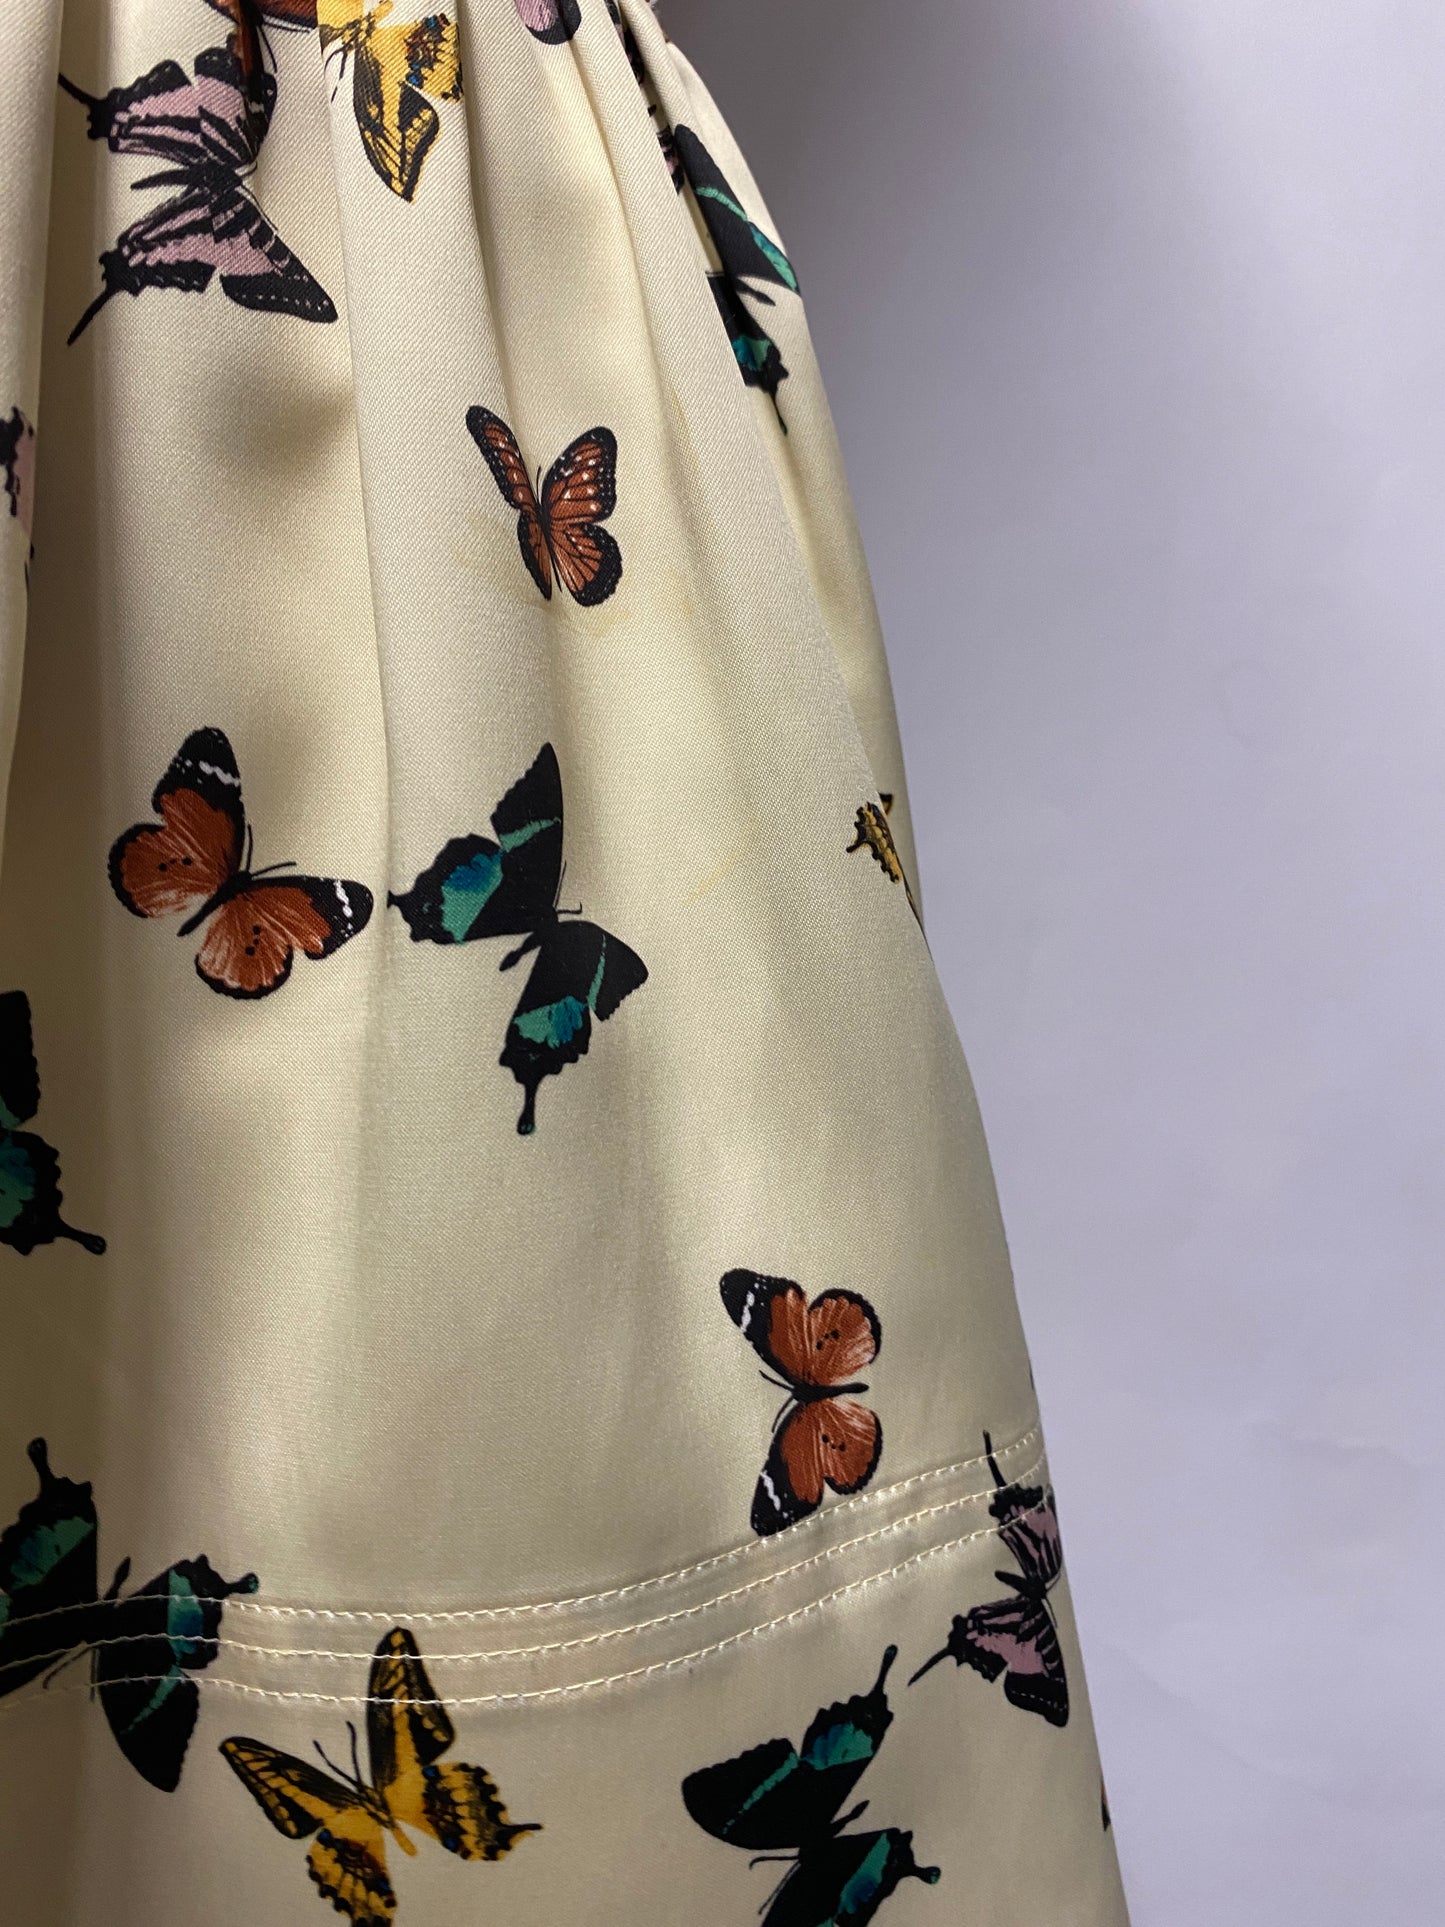 Ted Baker Cream Butterfly Print Satin Mini Skirt Small/10